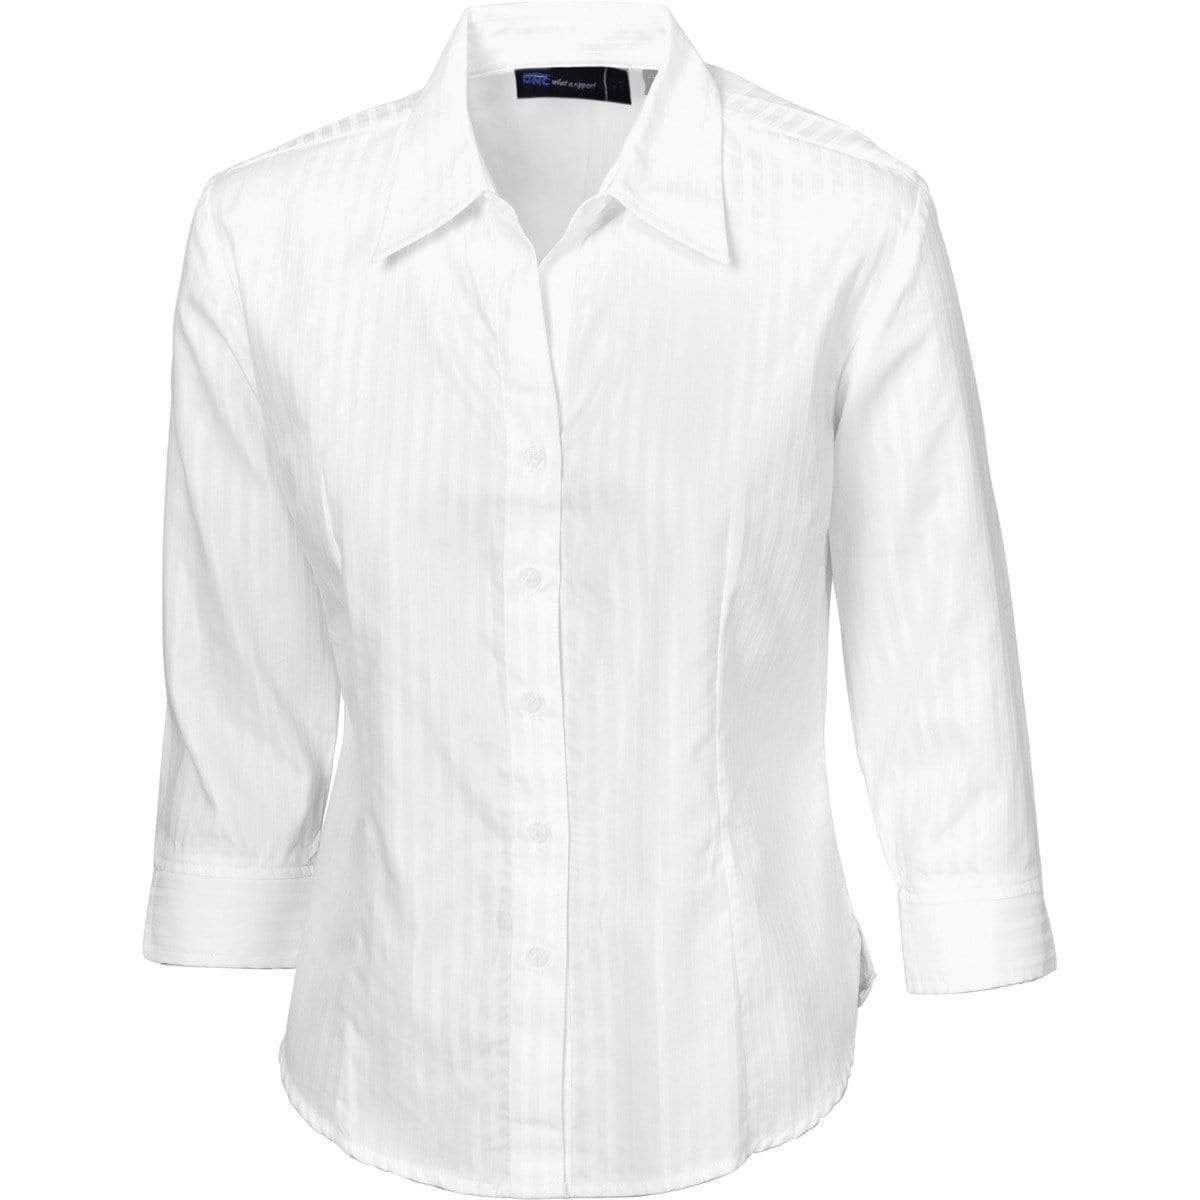 Dnc Workwear Ladies Tonal Stripe 3/4 Sleeve Shirt - 4236 Corporate Wear DNC Workwear White 6 